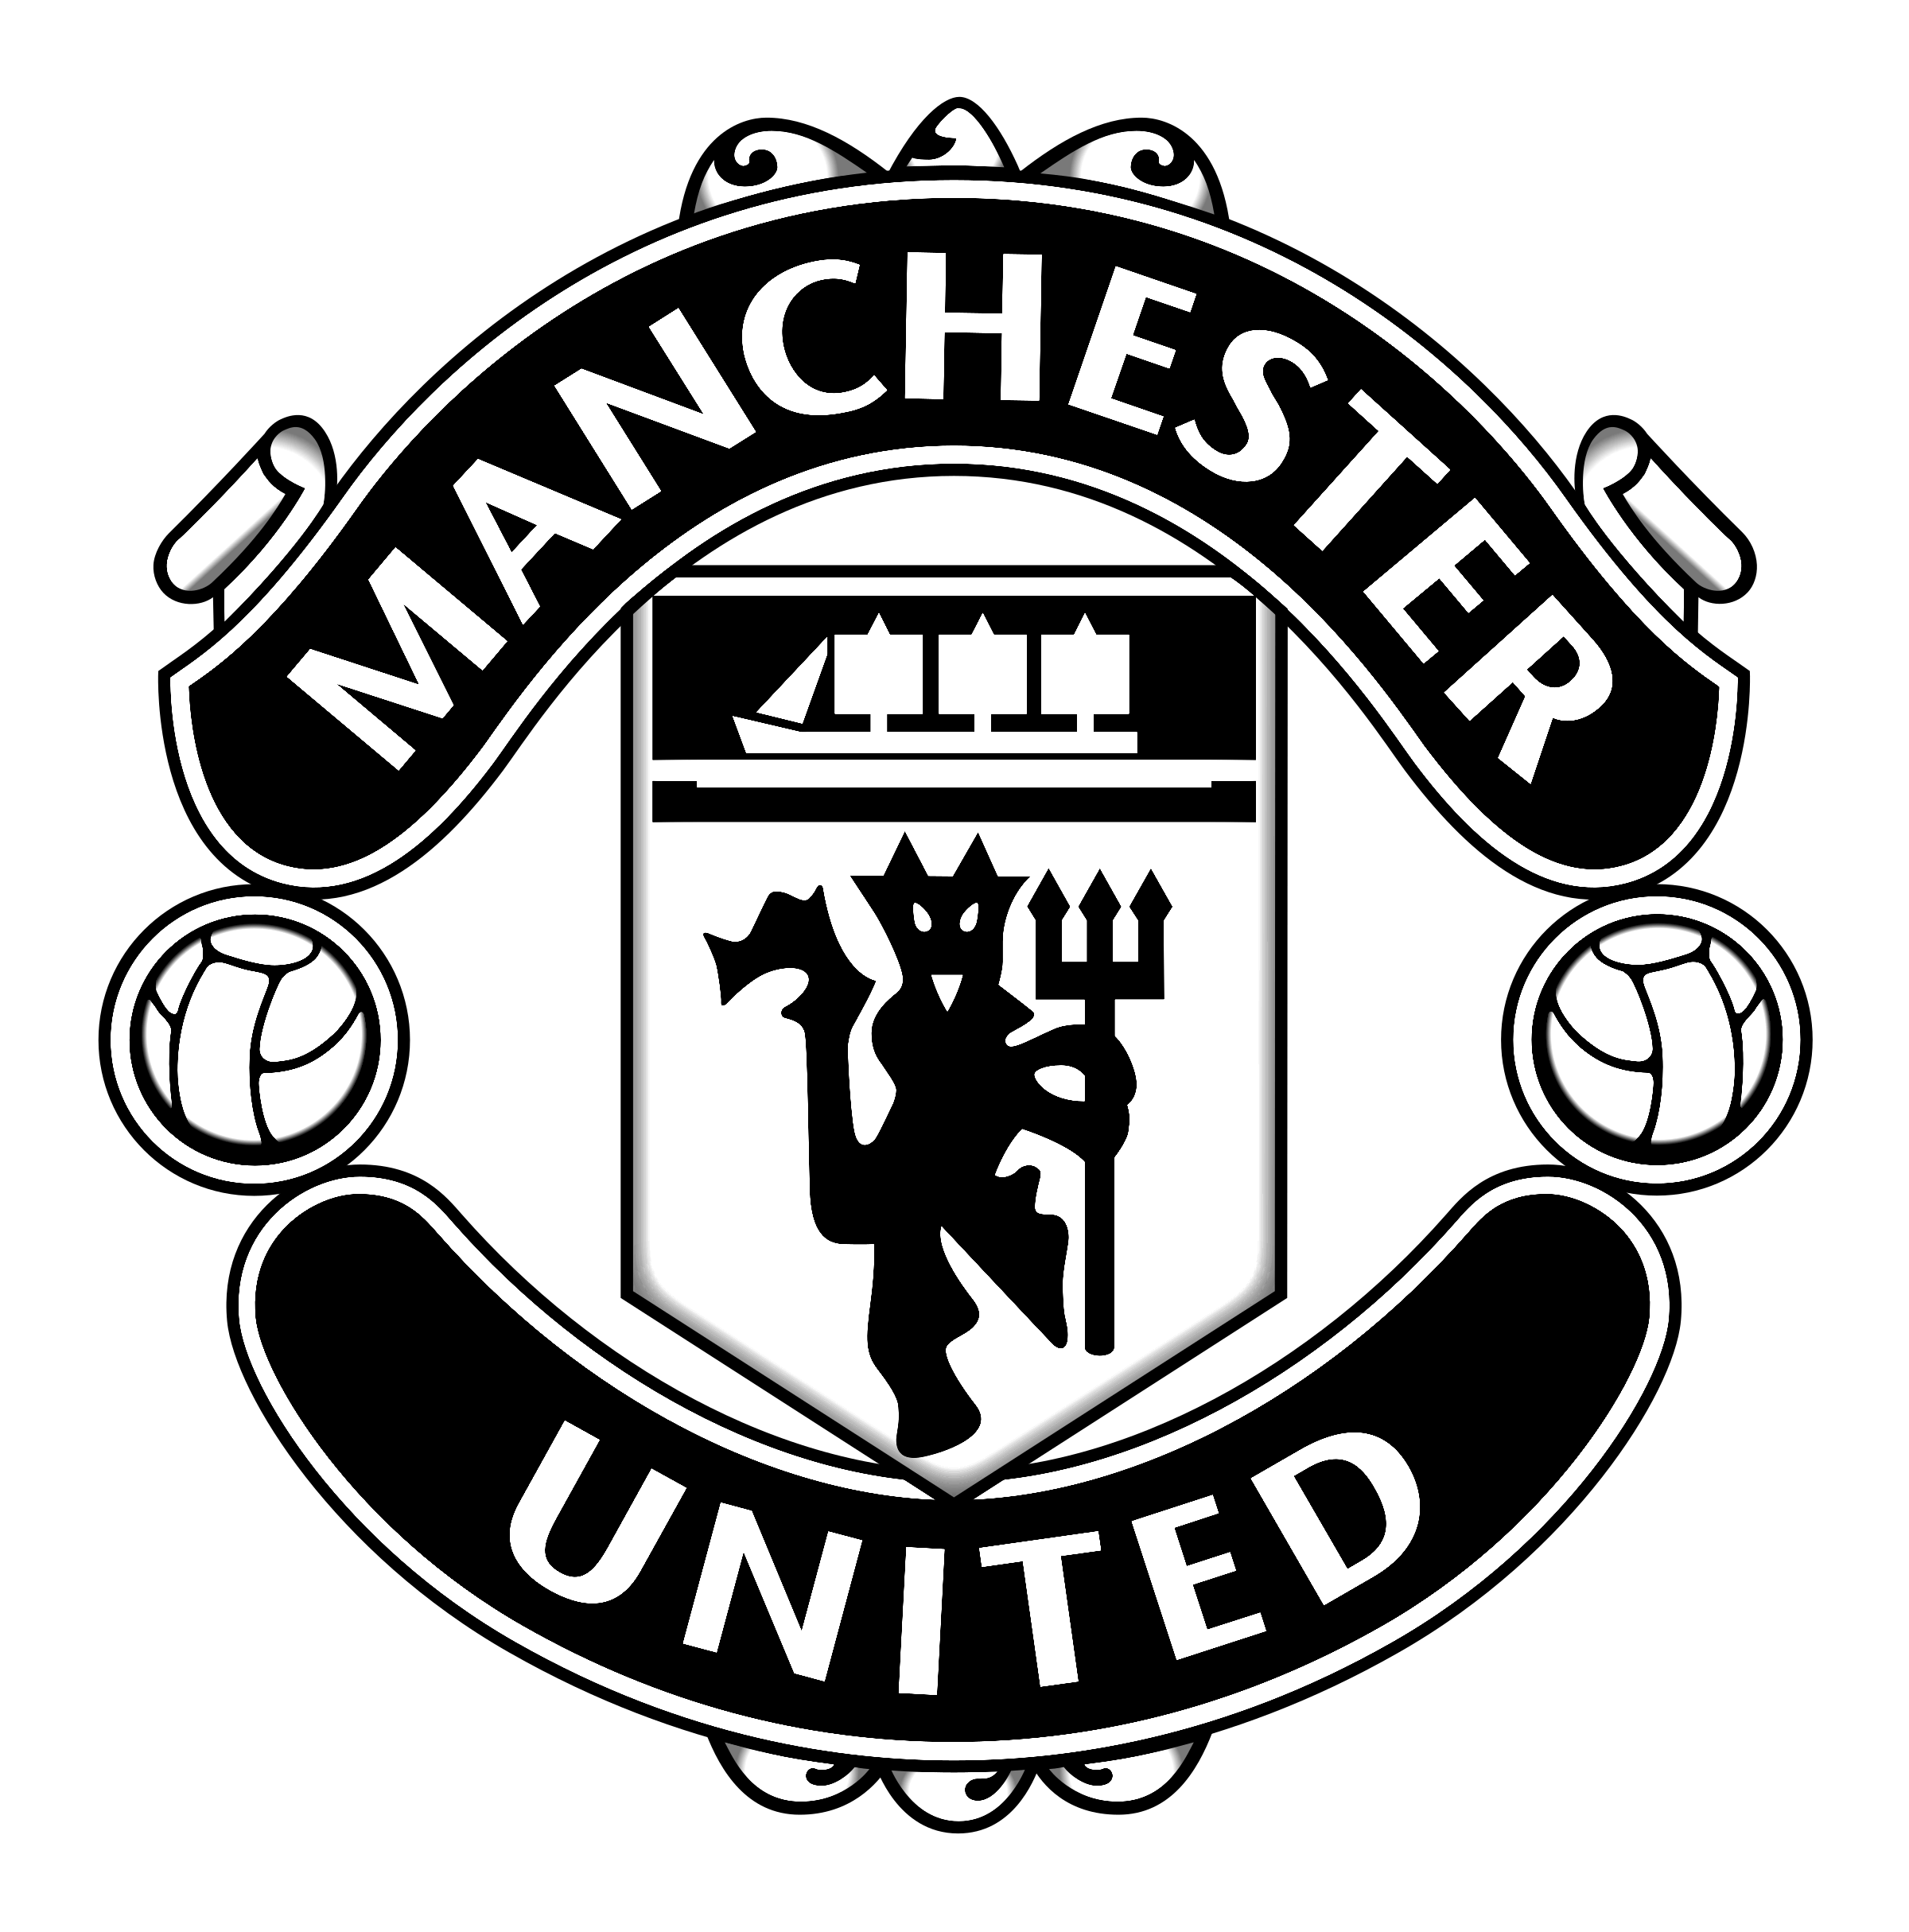 Manchester United Logo - Manchester United Logo PNG Transparent & SVG Vector - Freebie Supply